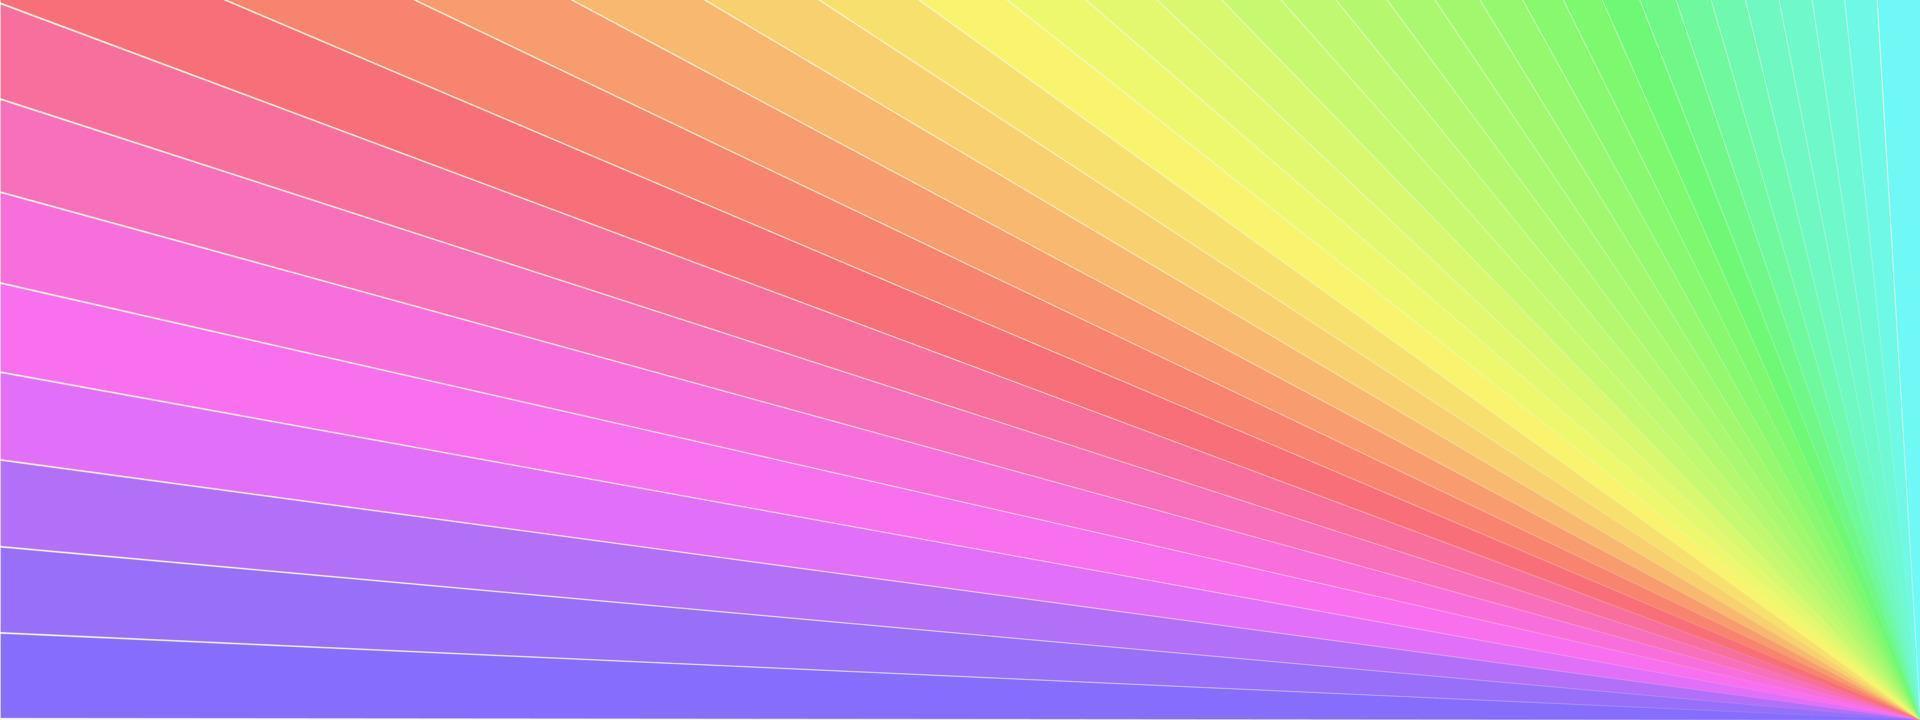 Abstract background rays shiny festival rainbow stripe vector illustration